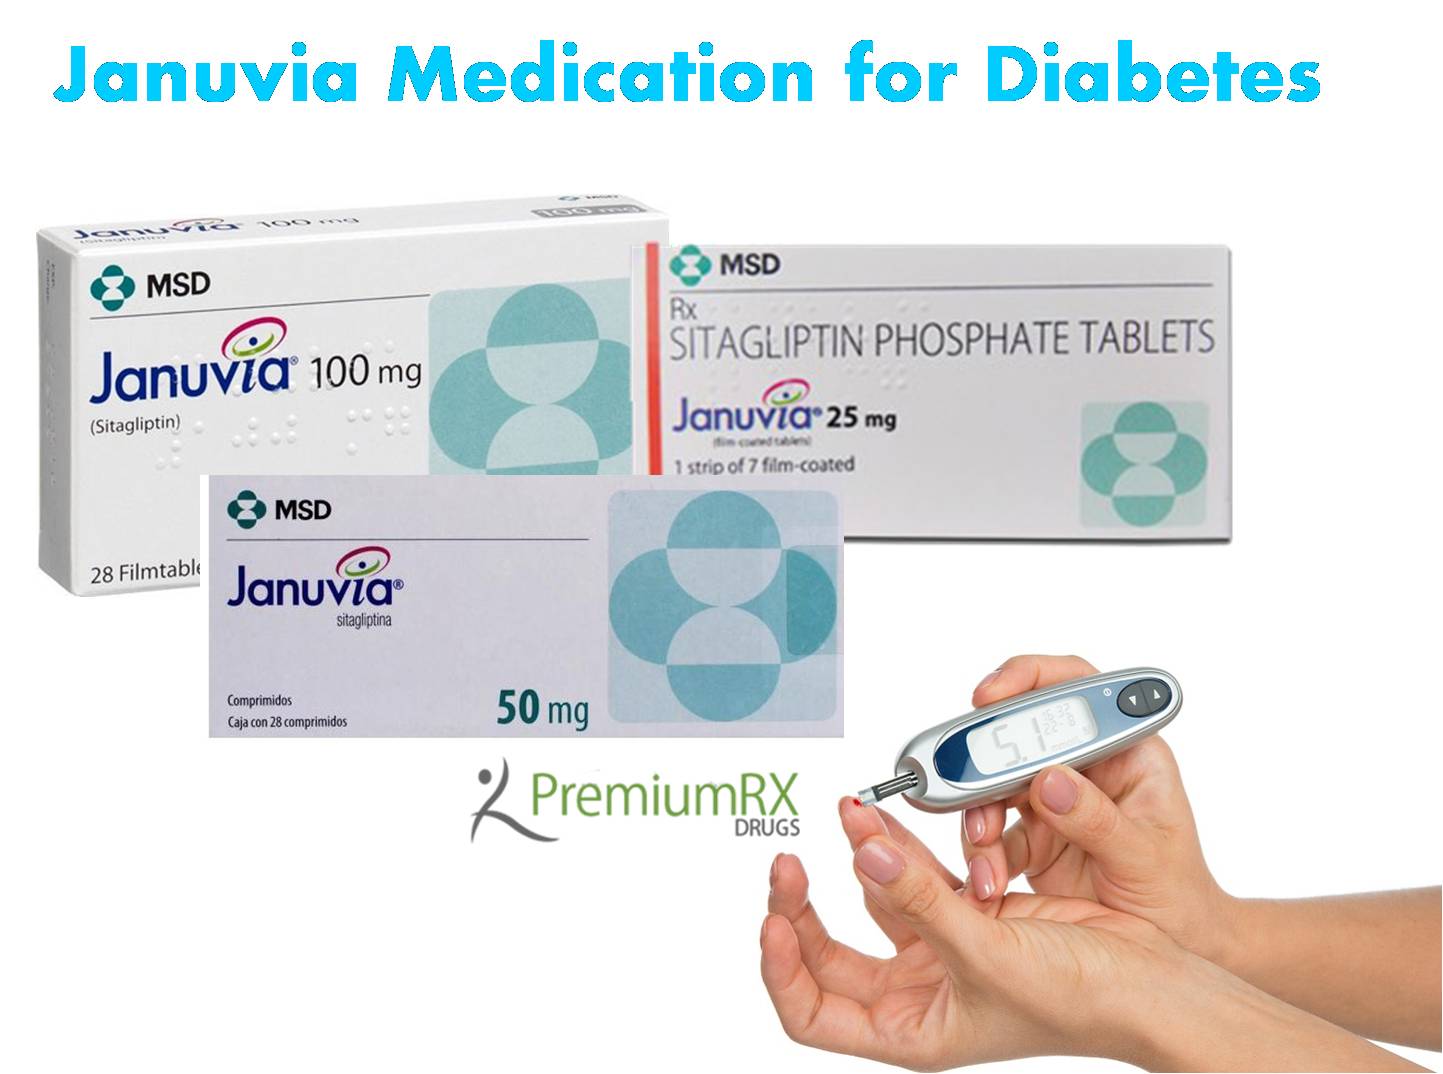 Januvia Medication for Diabetes